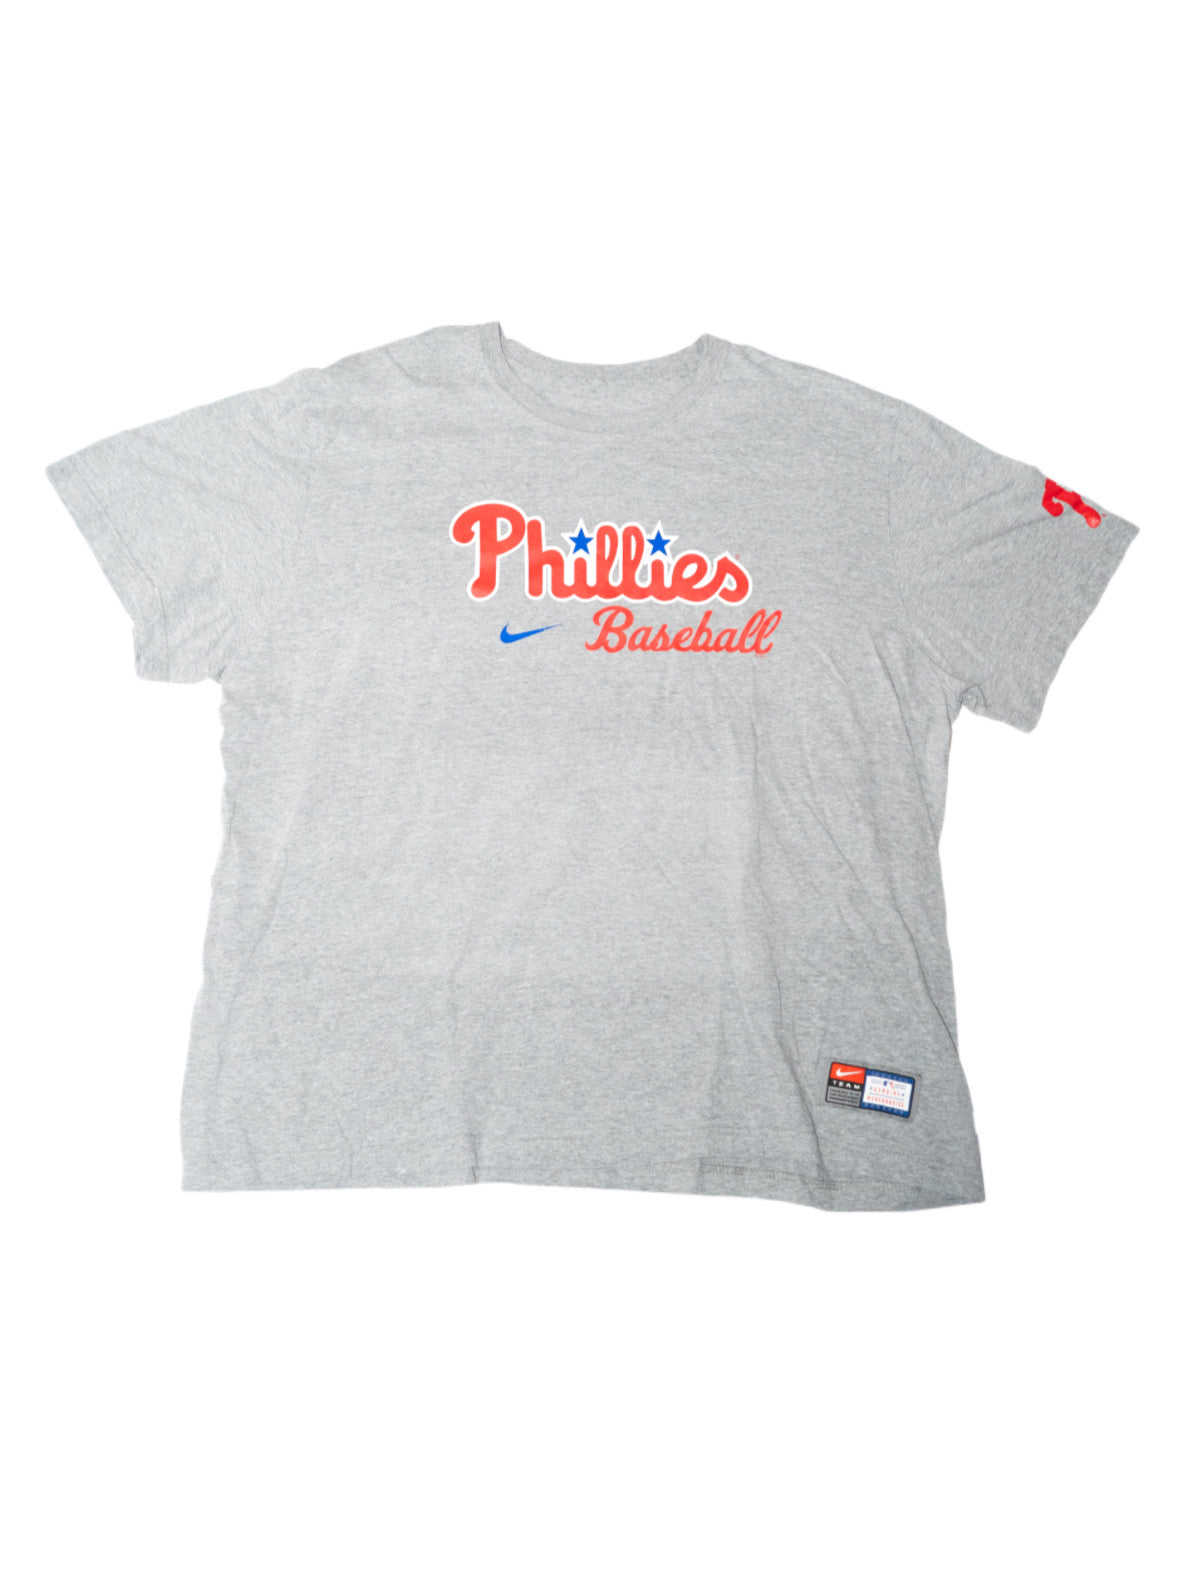 Nike Phillies Baseball T-Shirt – Vintage Online Shop